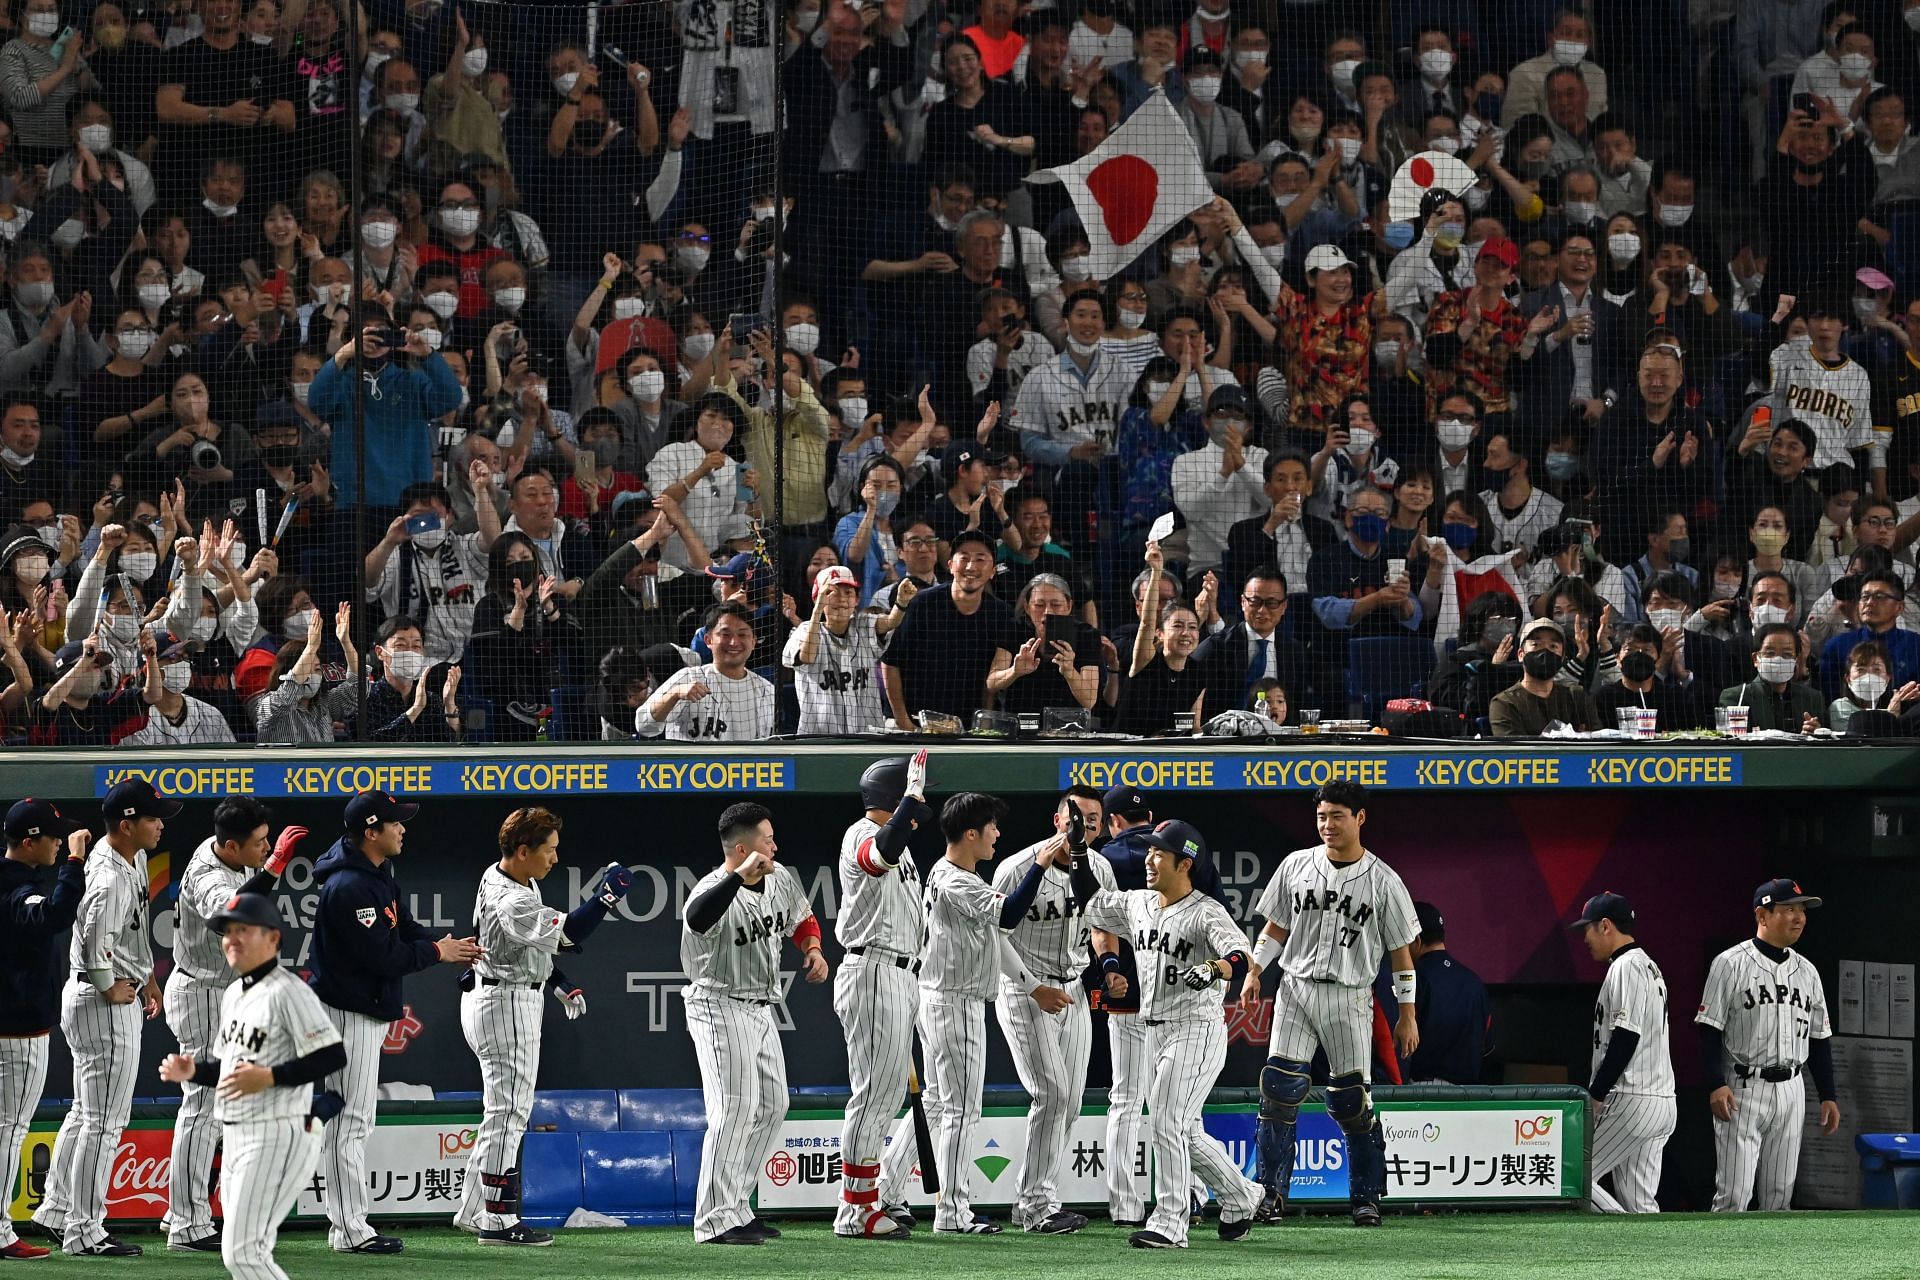 MLB on X: After leading Team Japan to #WorldBaseballClassic glory